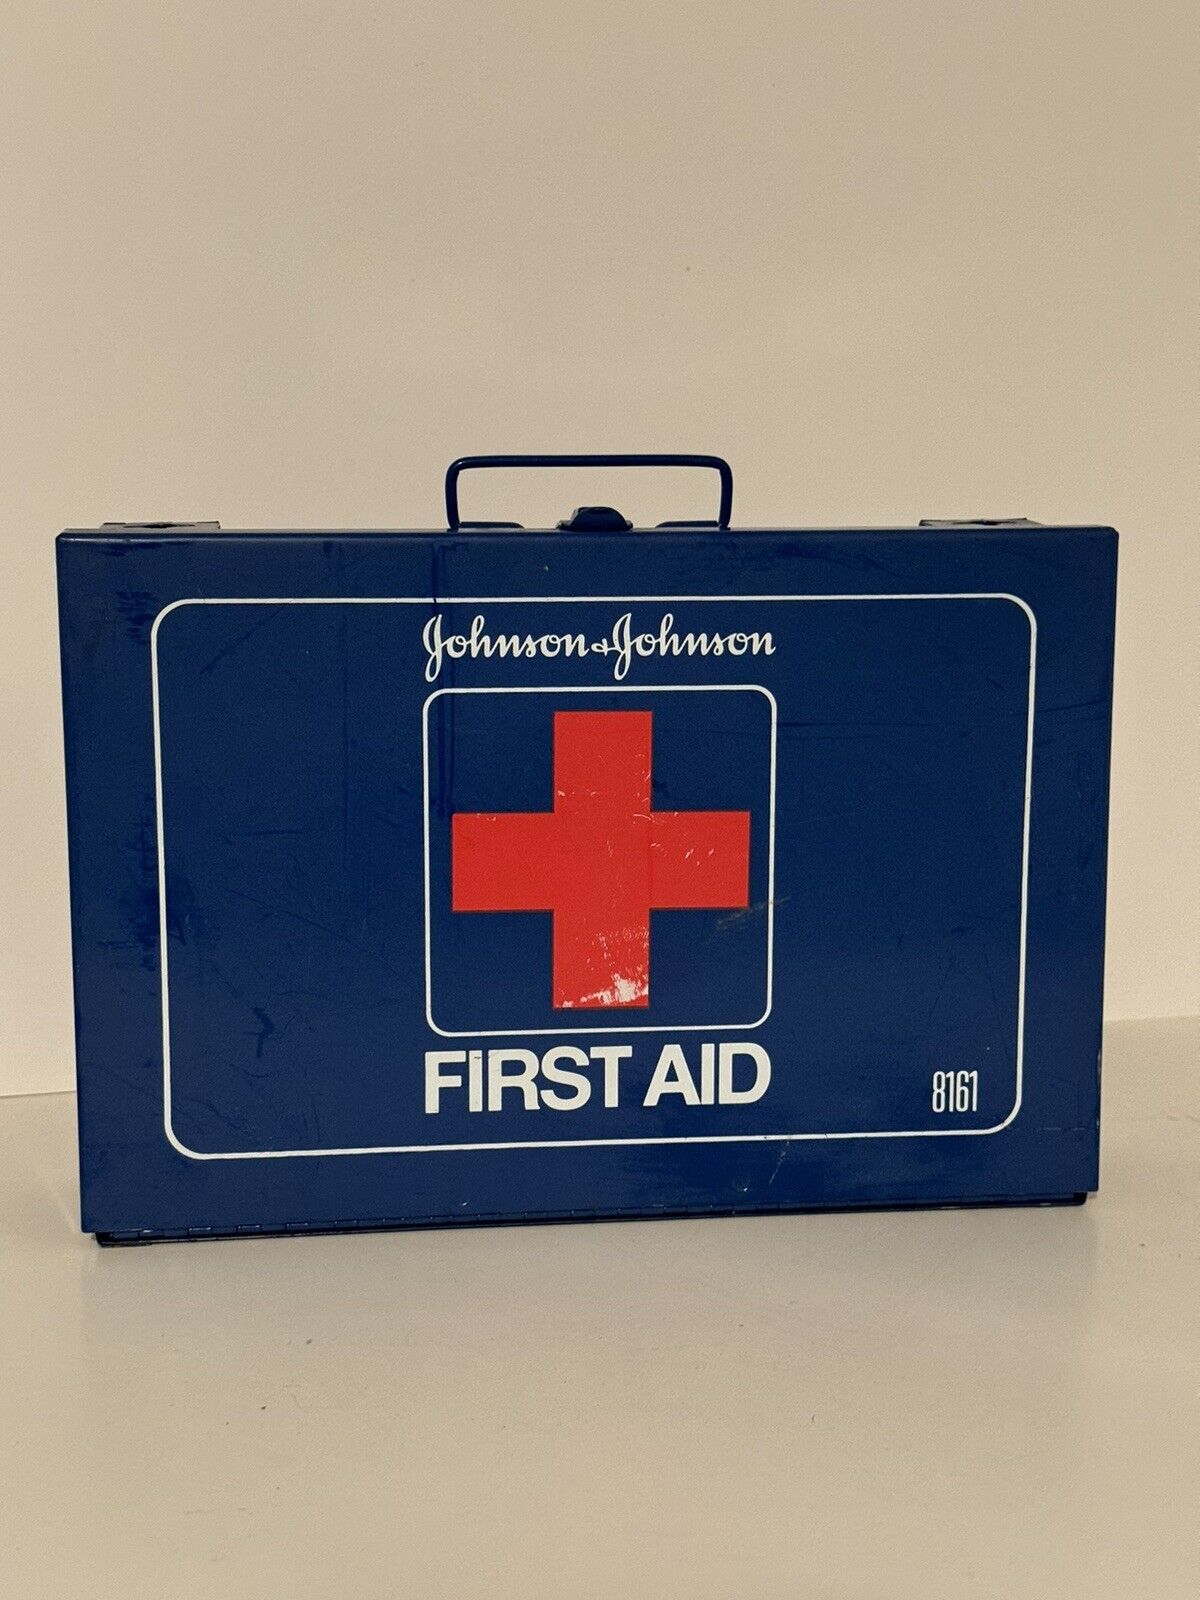 Vintage Wall Mount Johnson & Johnson First Aid Kit Blue Metal Box #8161 USA